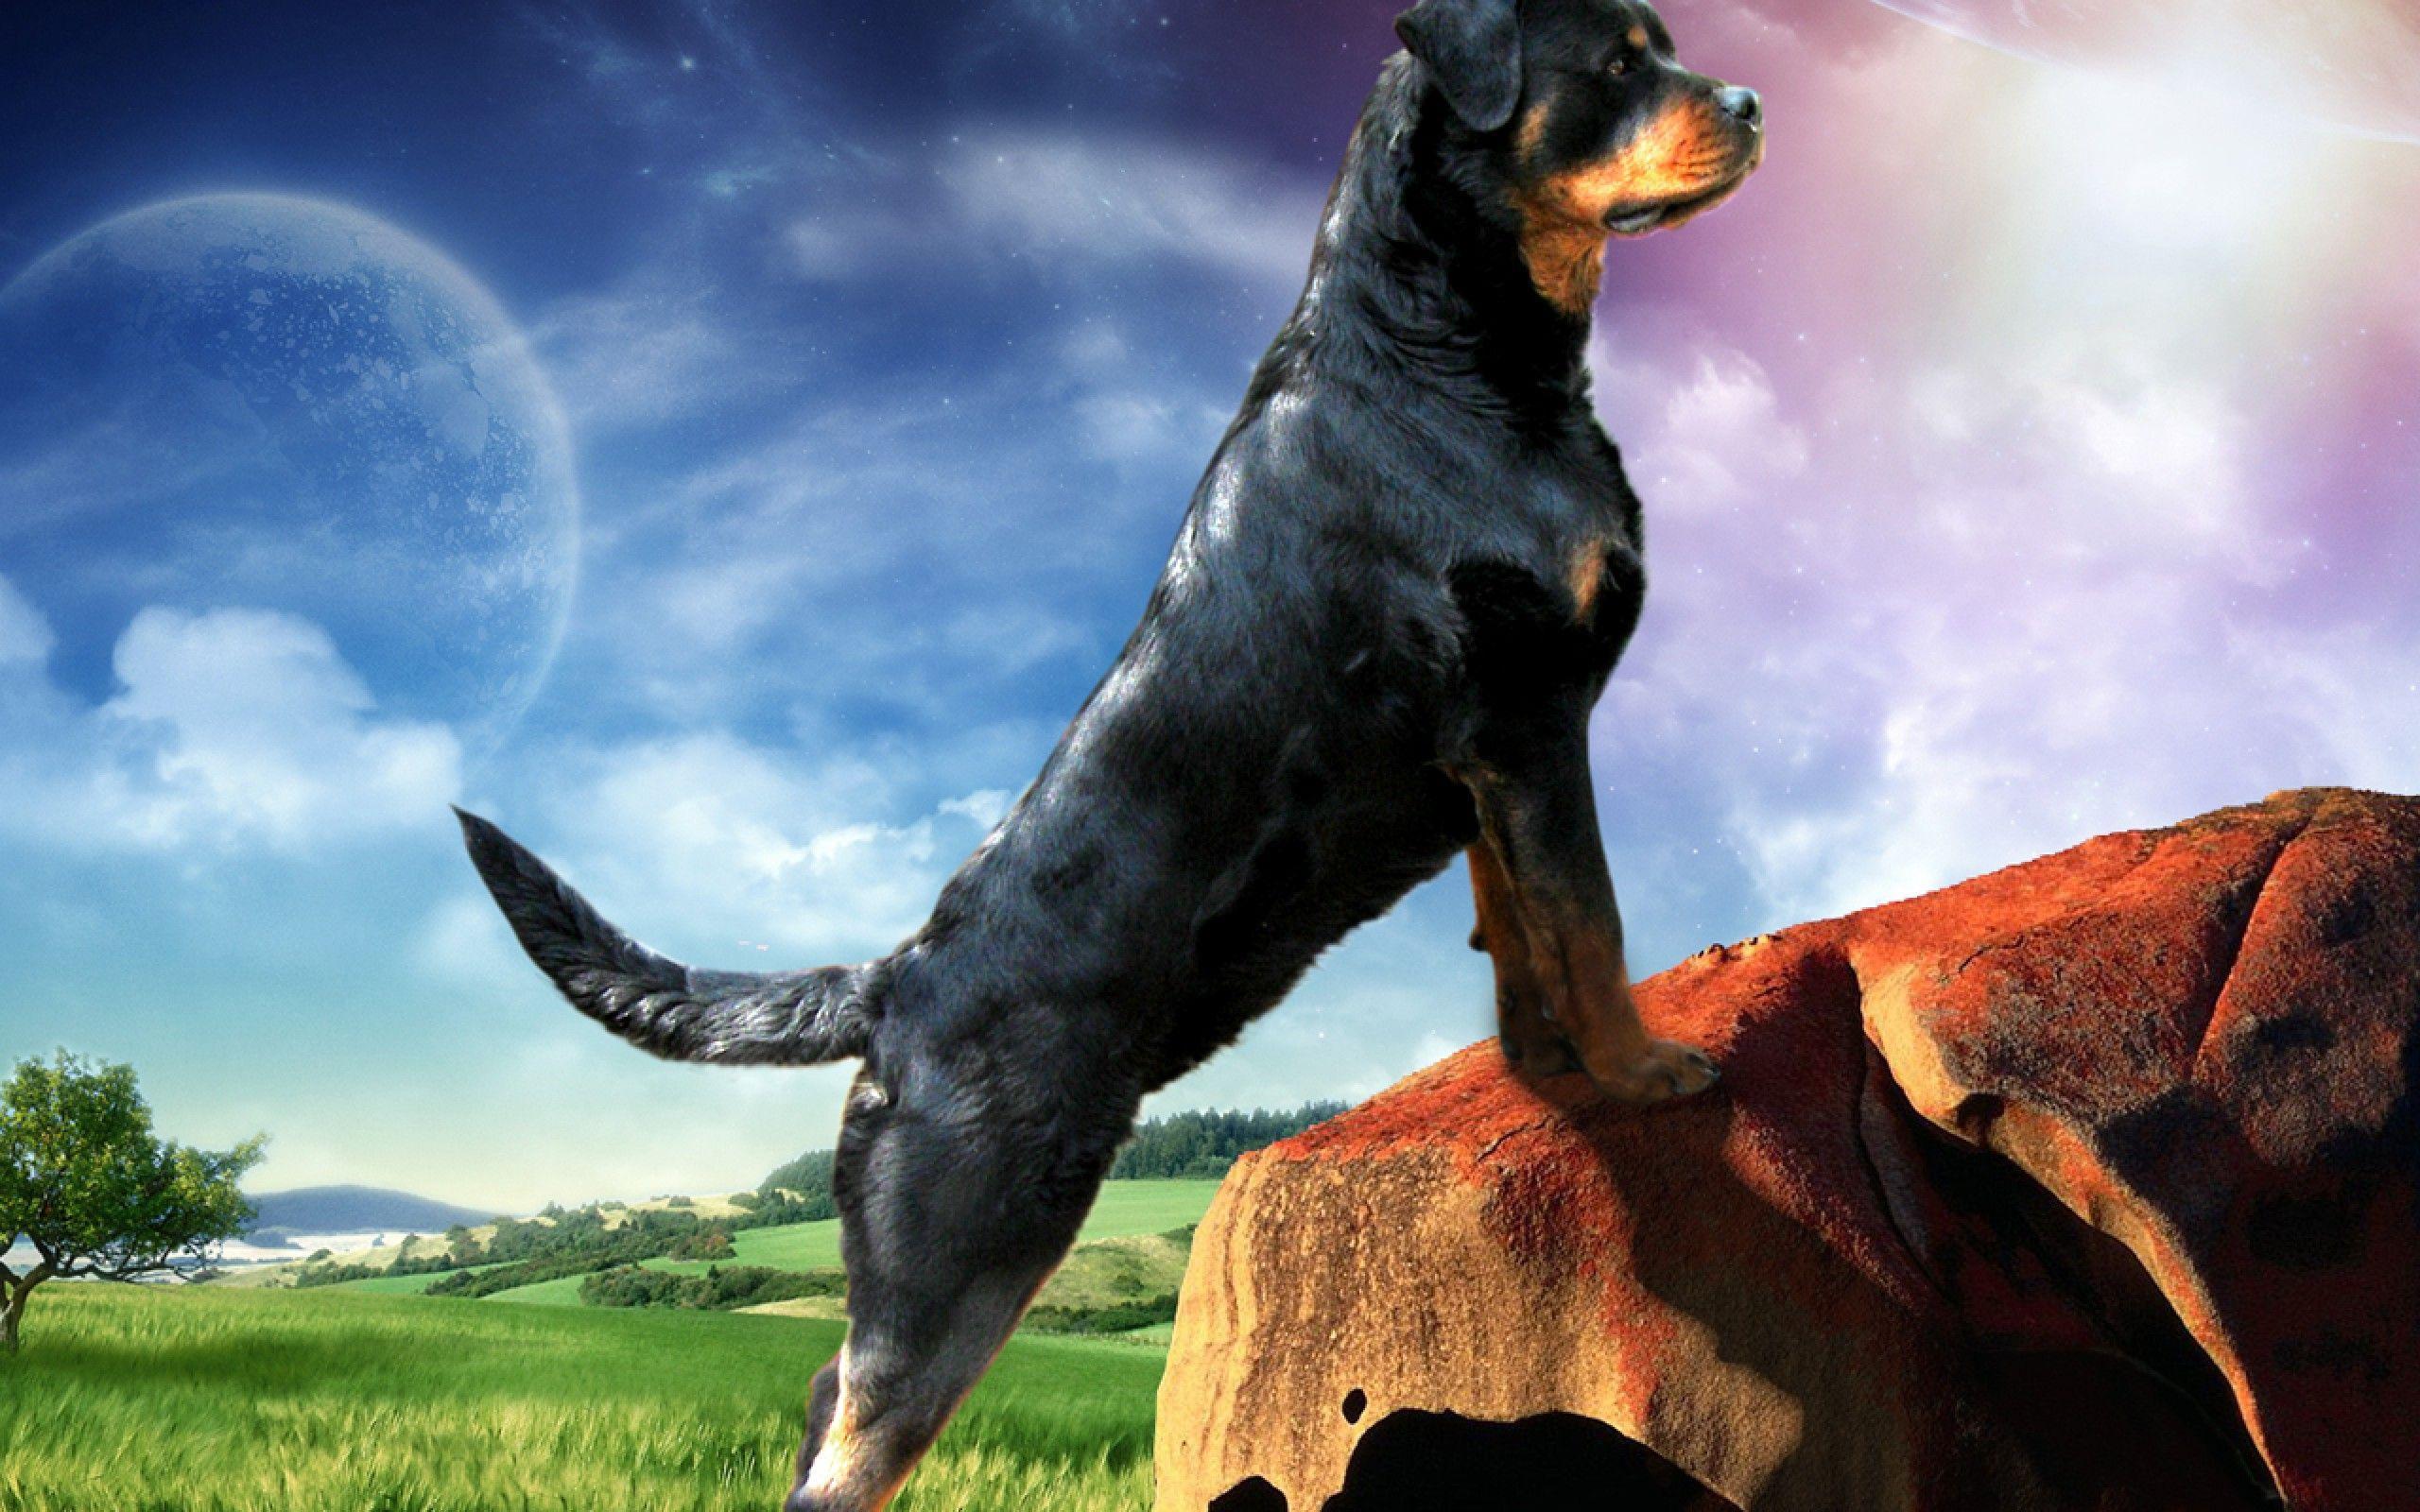 V.281: Rottweiler Dogs Wallpaper, HD Image of Rottweiler Dogs